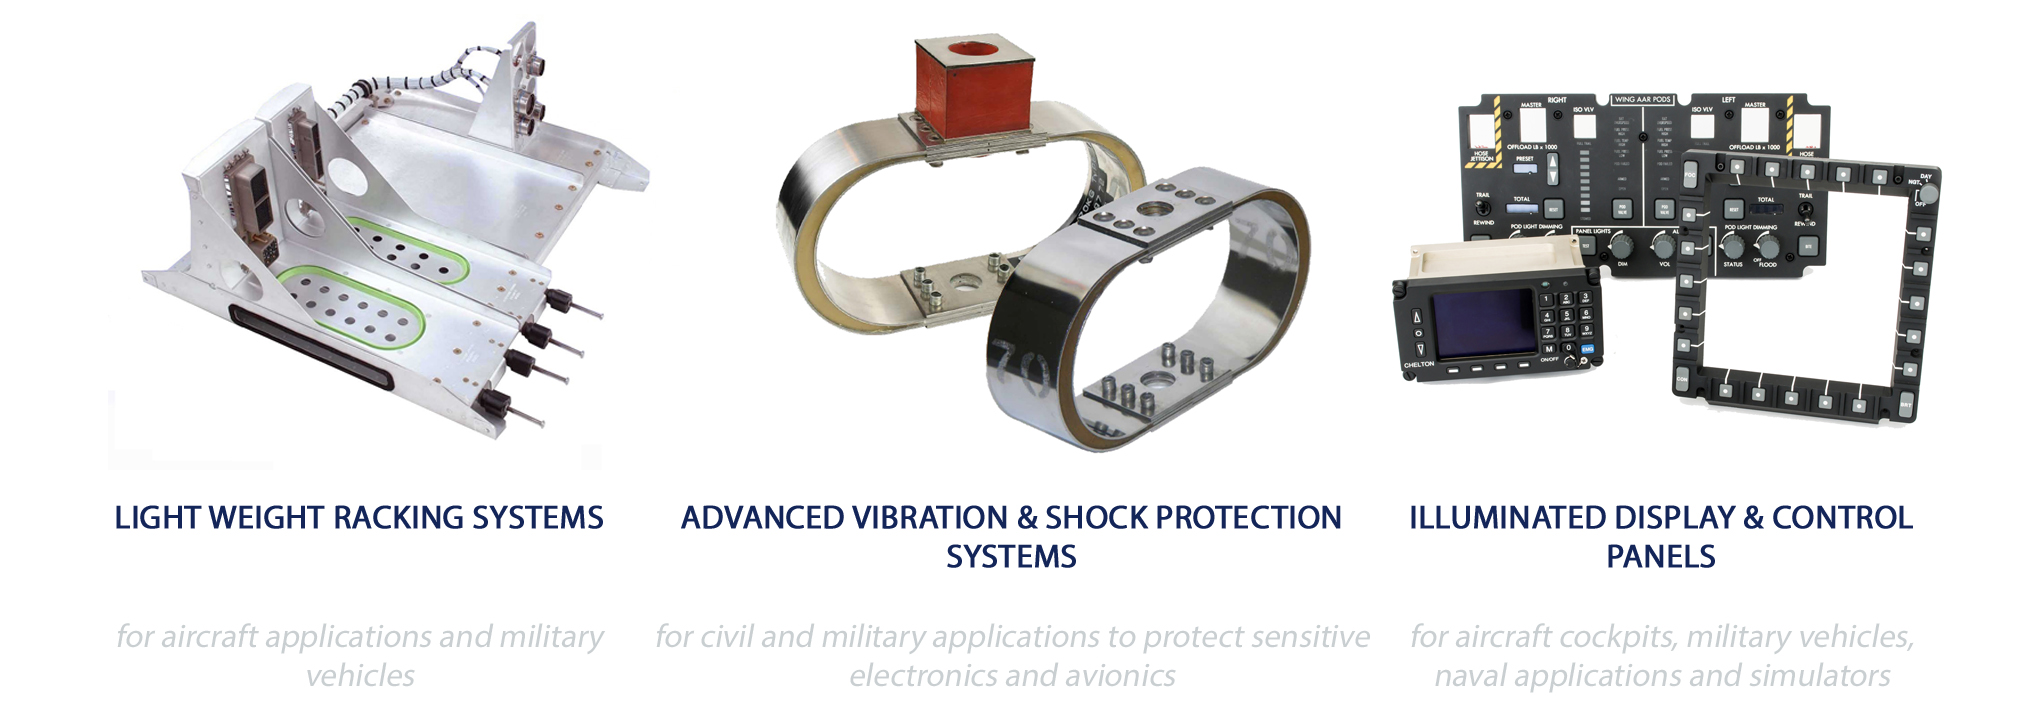 Avionics Racking, Shock Protection, Illuminated Display & Control Panels